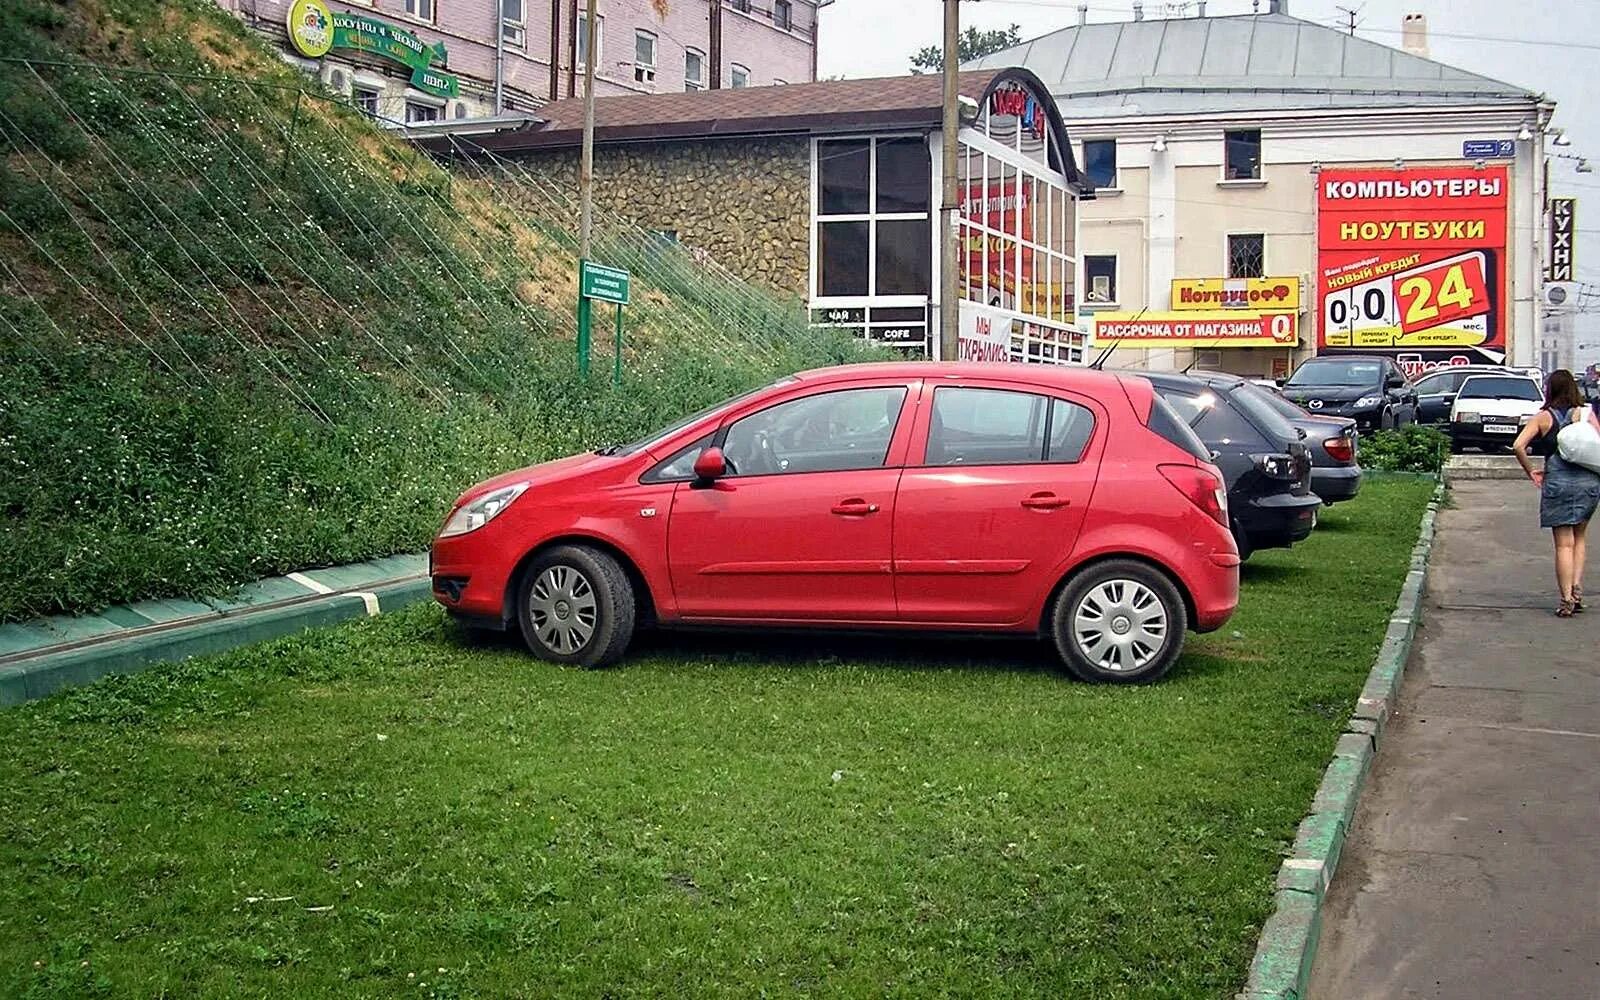 Парковка на тротуаре во дворе жилого дома. Парковка на газоне. Газон авто. Машина припаркована на газоне. Тротуар парковка машины.